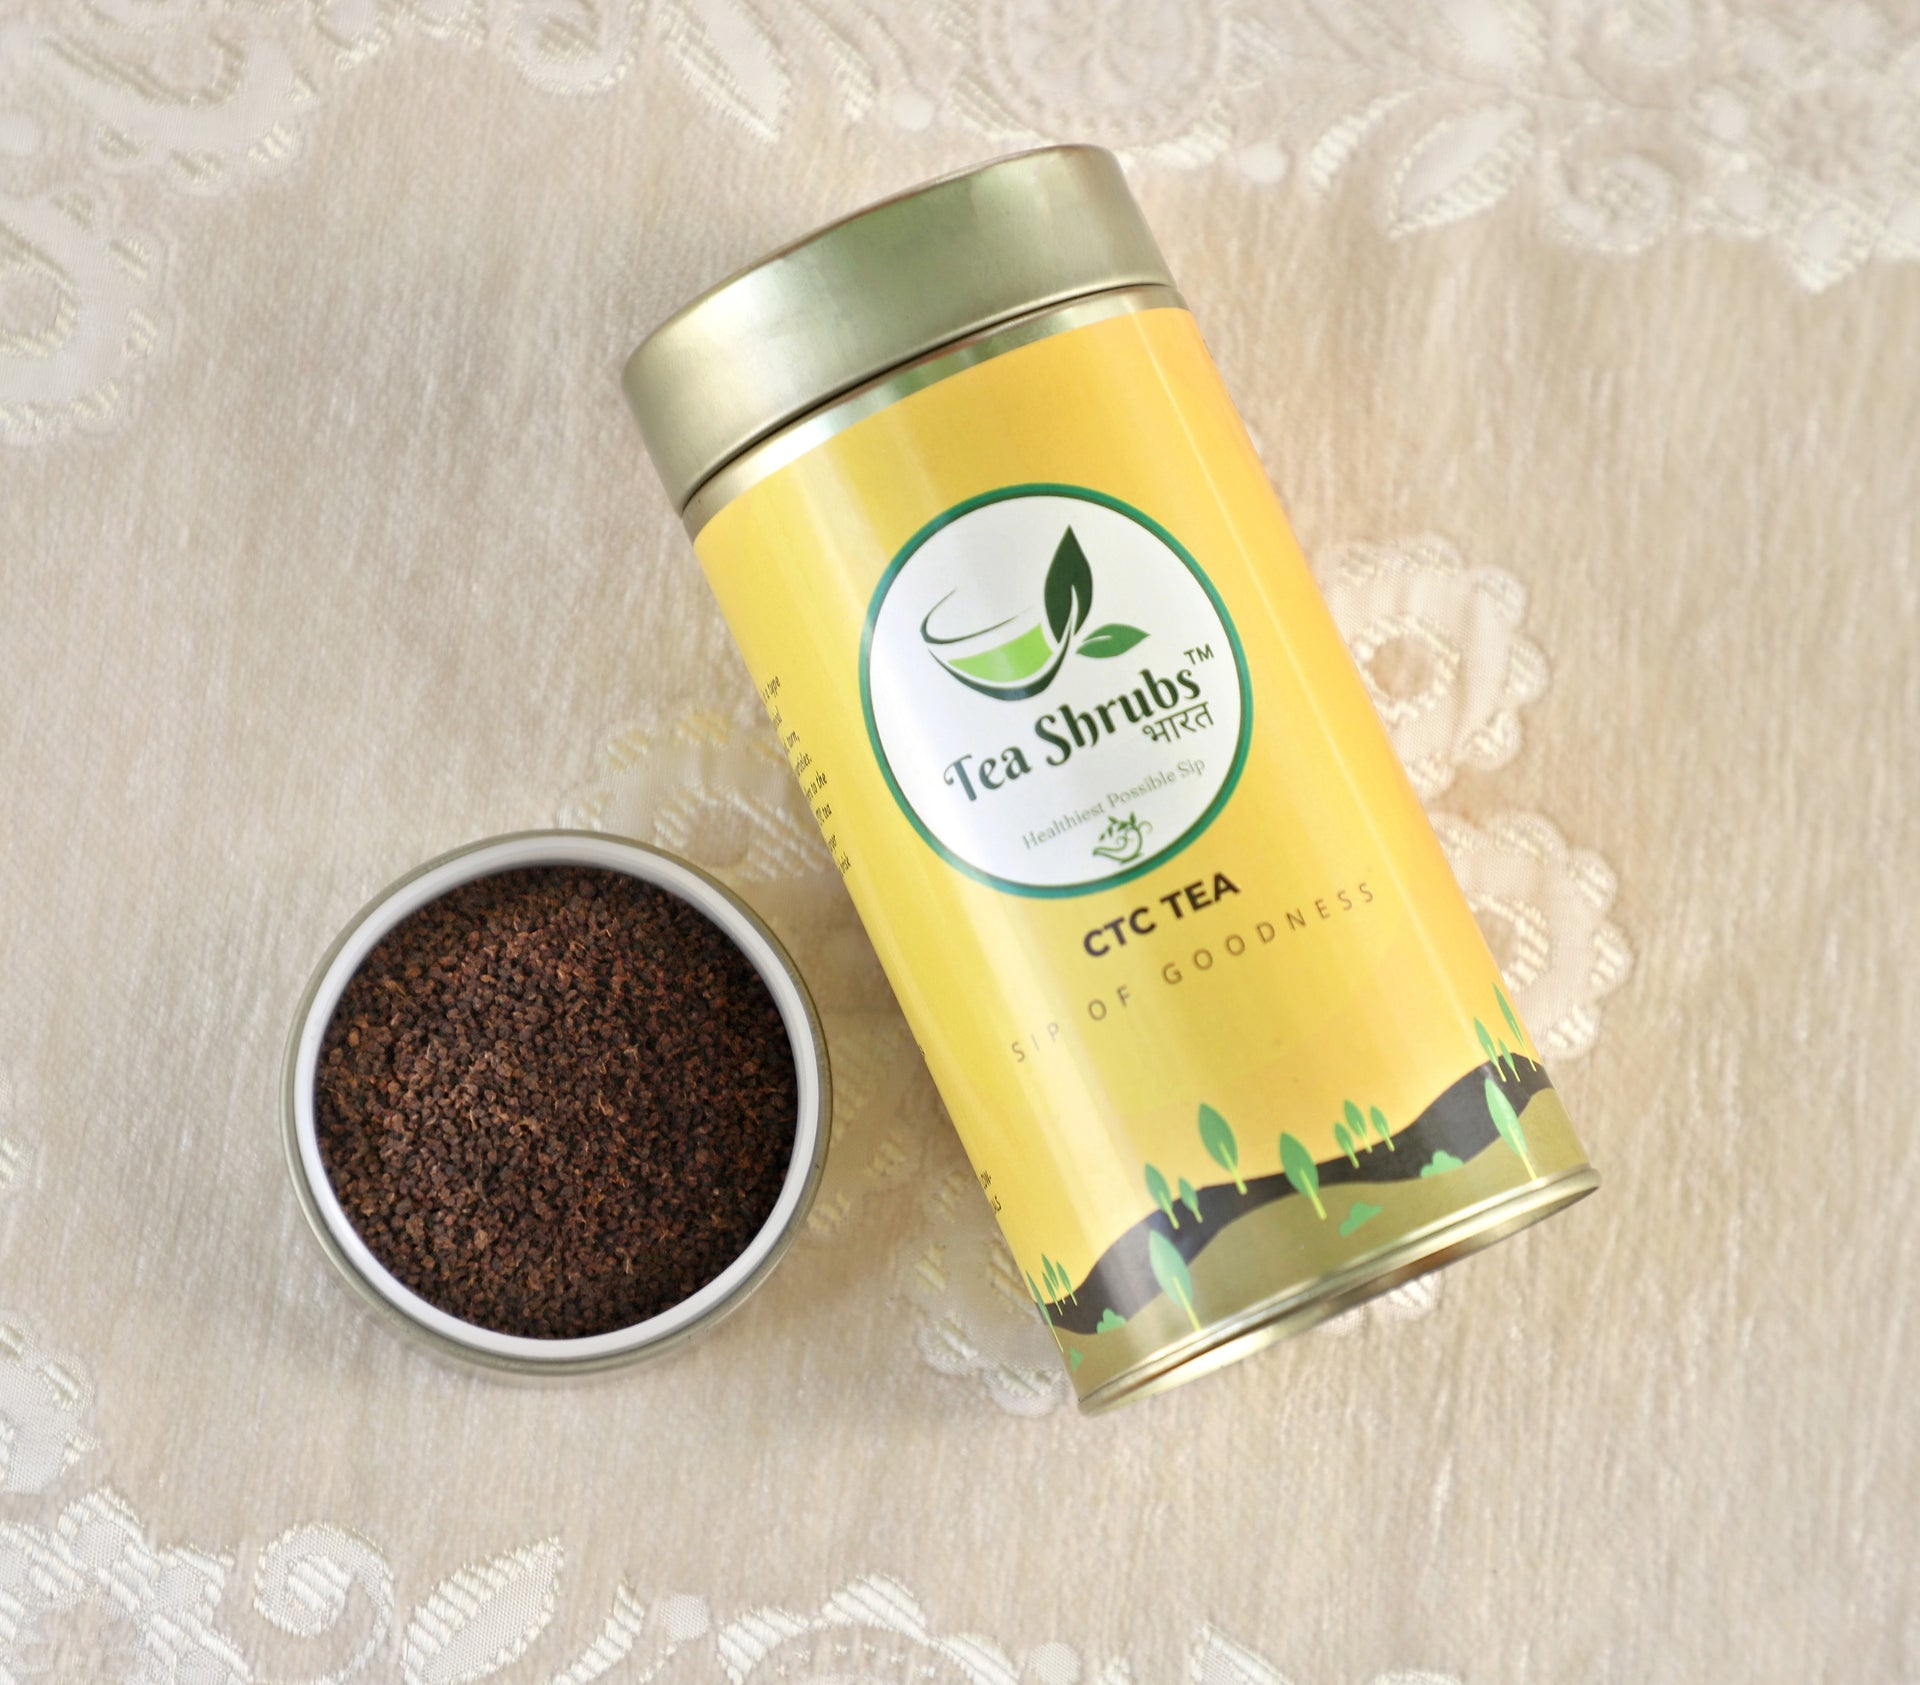 Assam Premium CTC Tea | Zero Dust Great Taste | 200 G